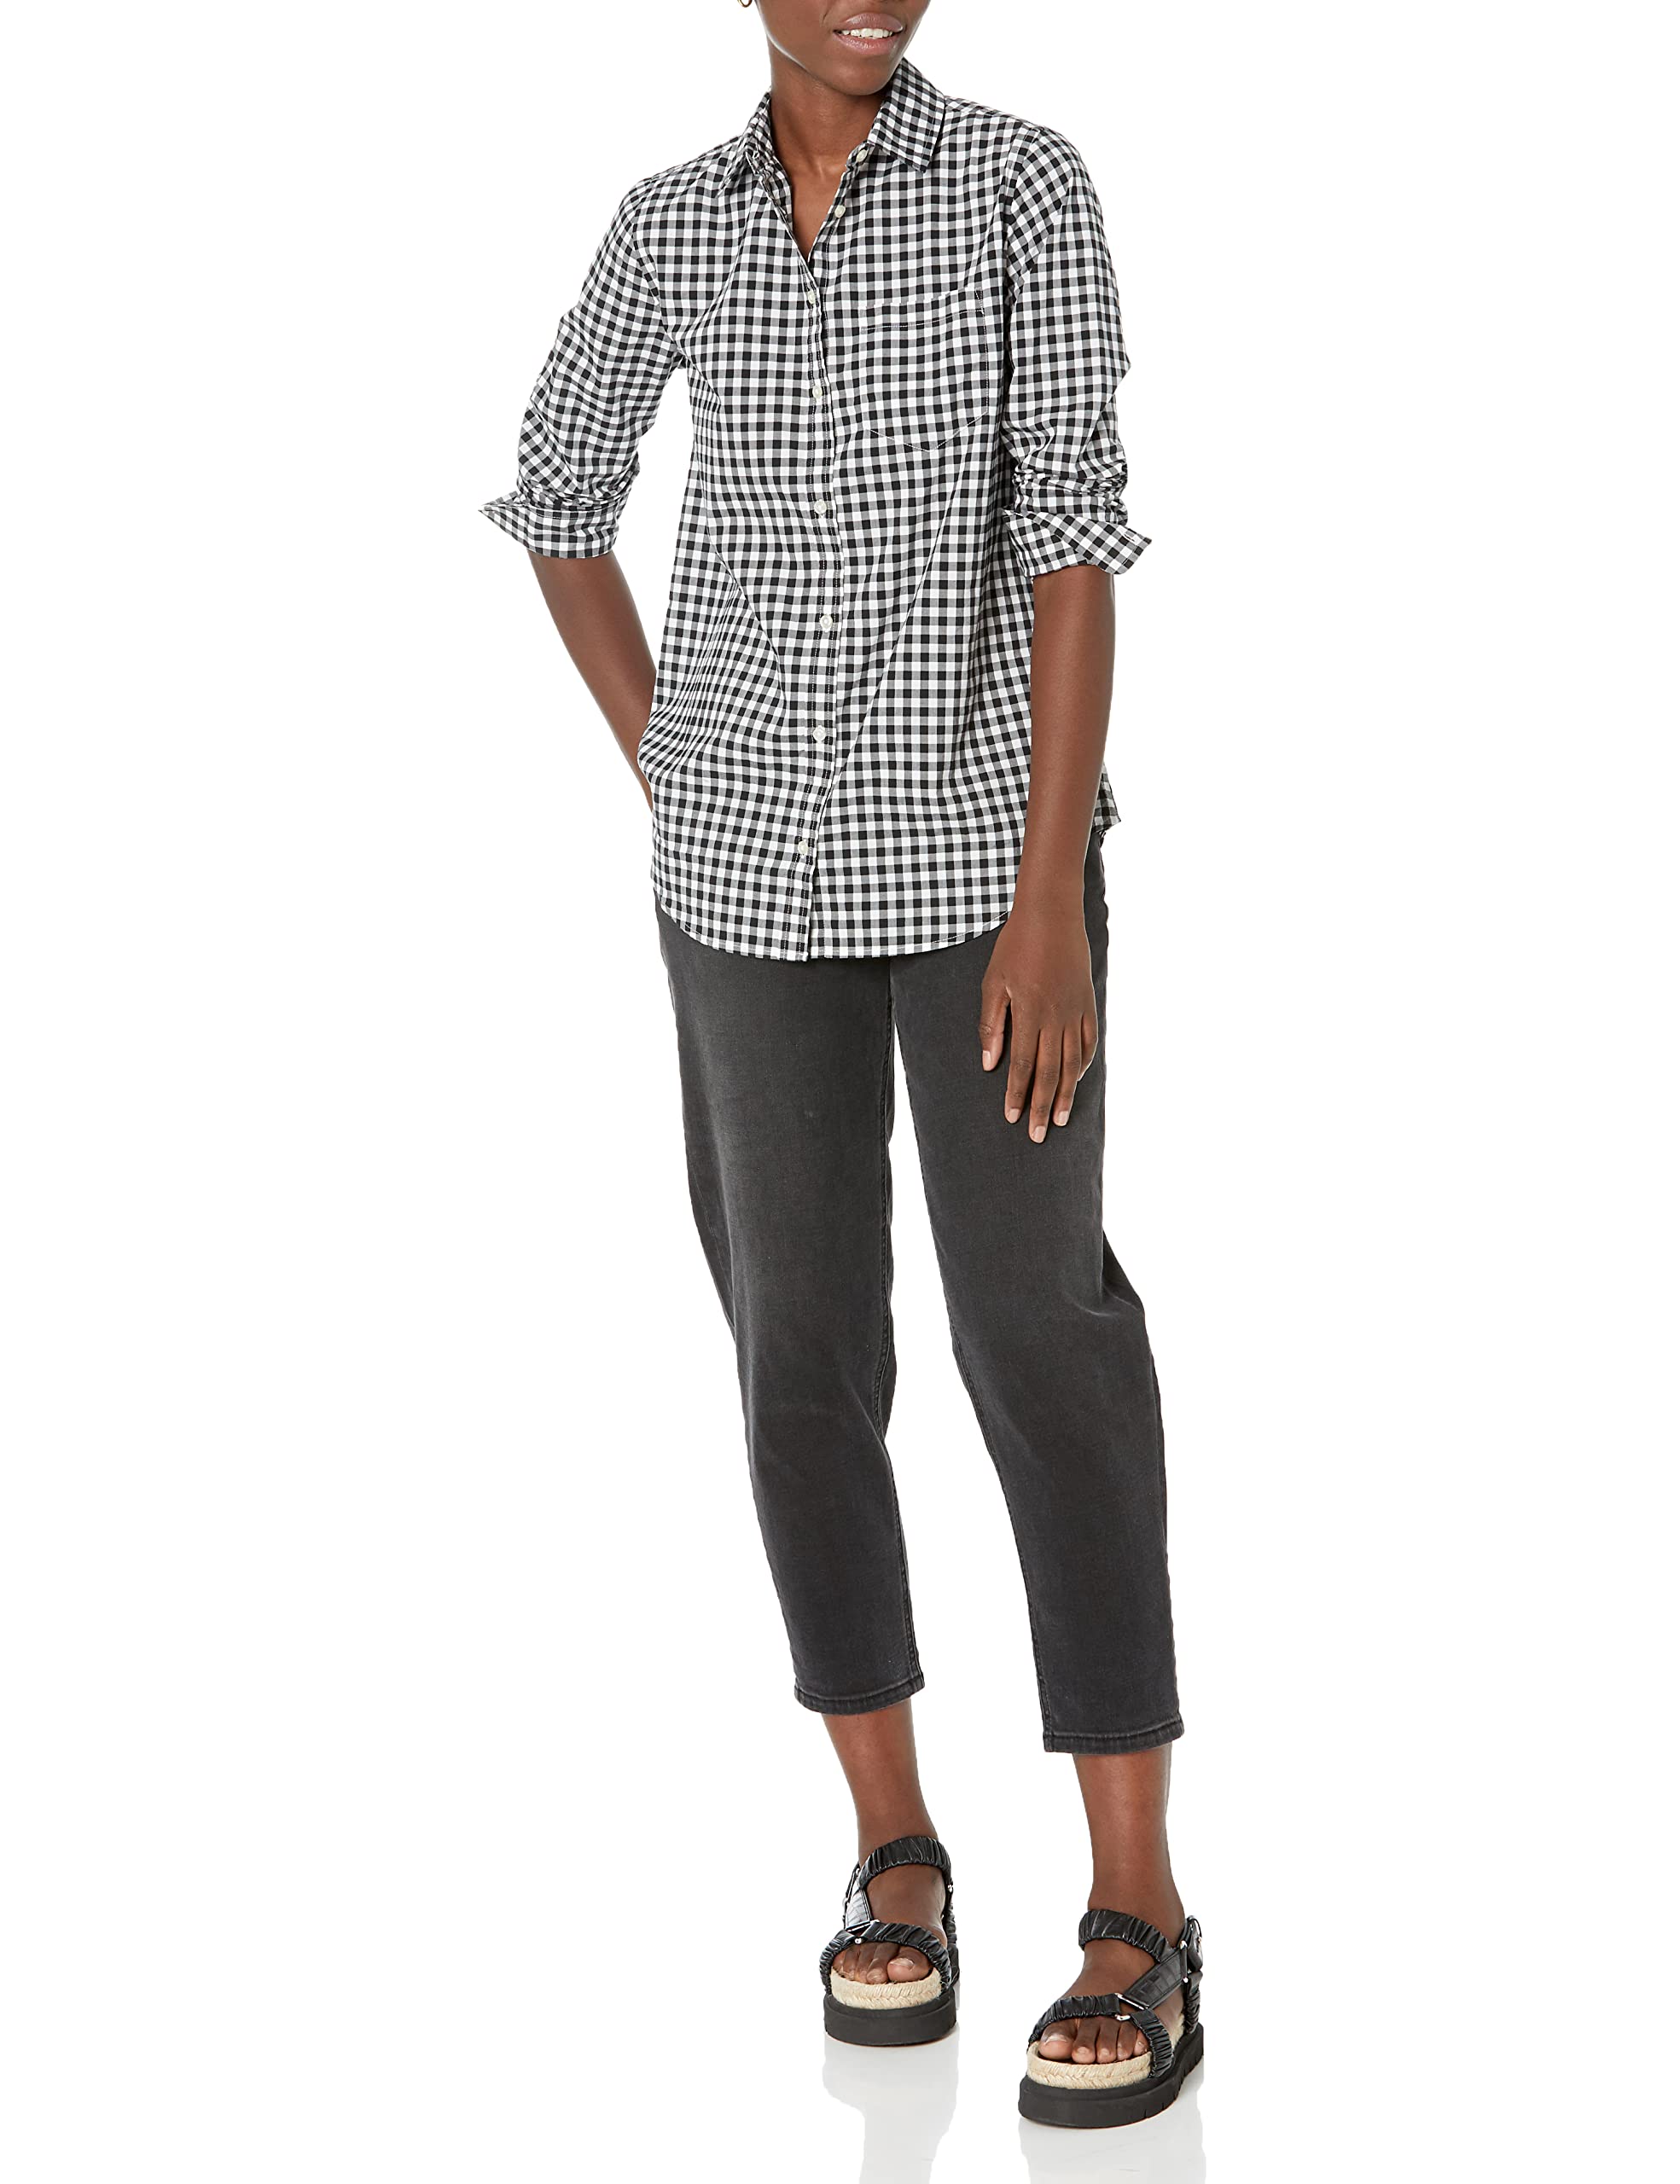 Amazon Essentials Women's Classic-Fit Long-Sleeve Button-Down Poplin Shirt